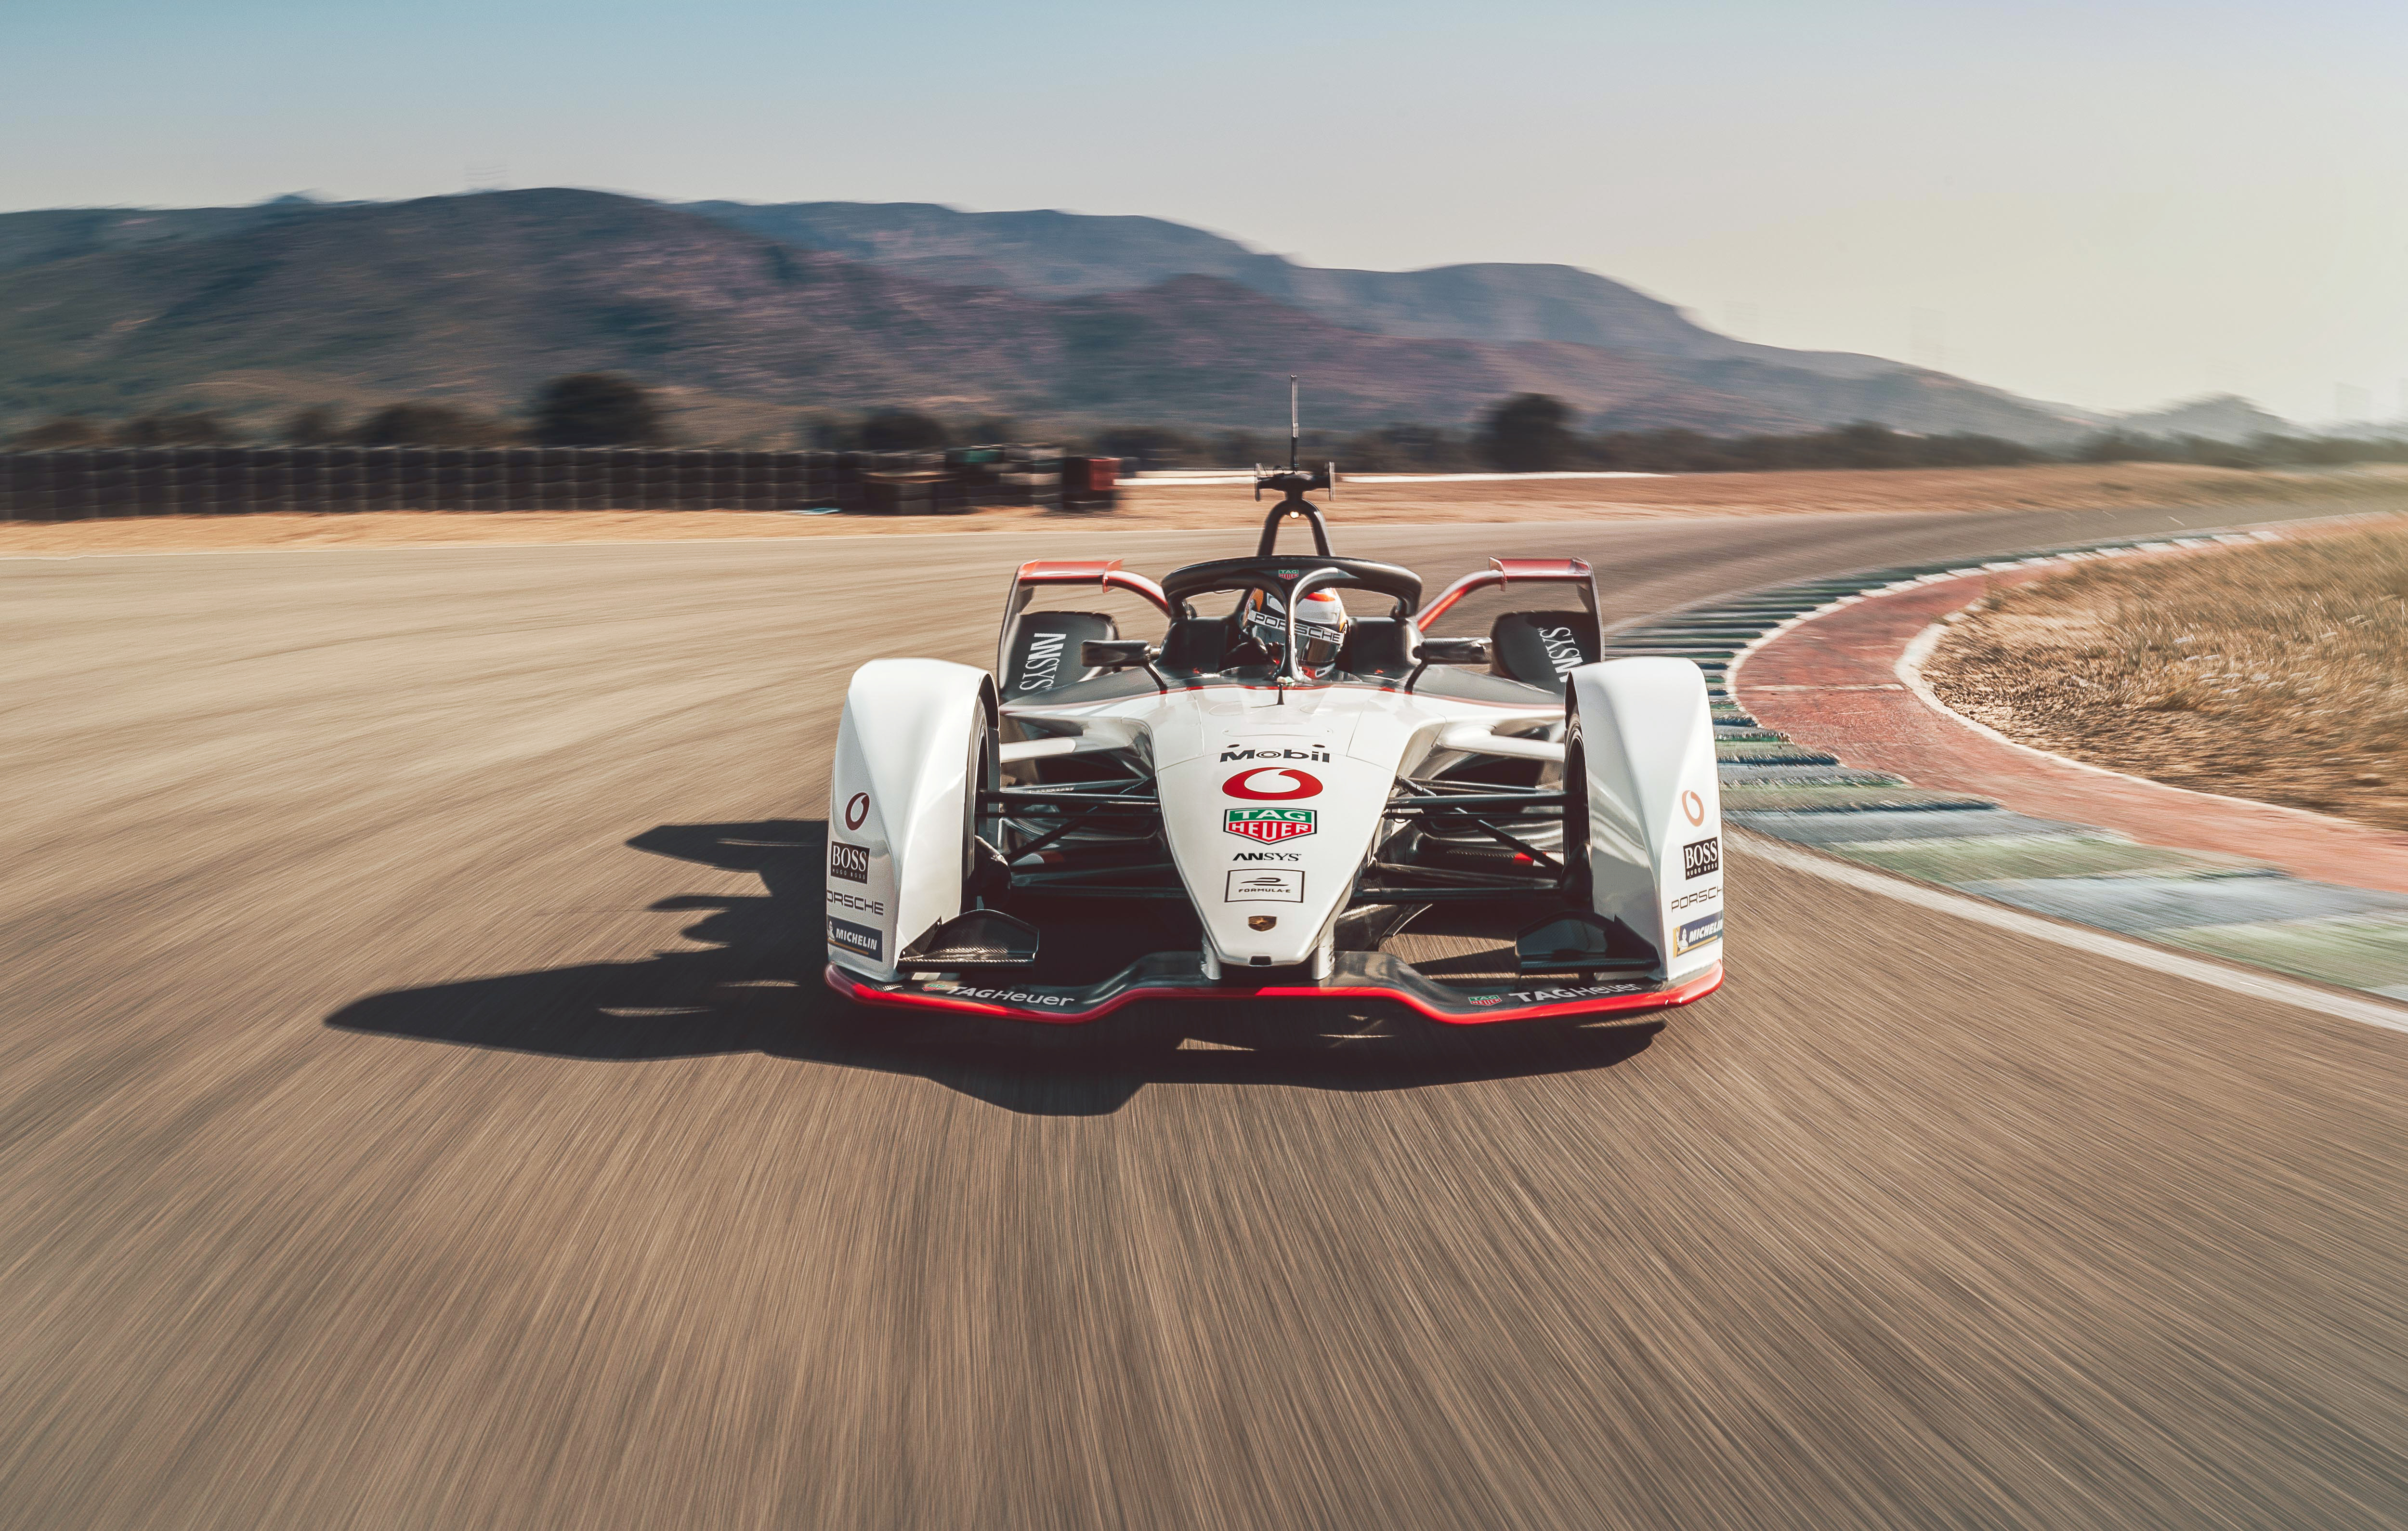 Mobil X Porsche: An Electric Racing Partnership